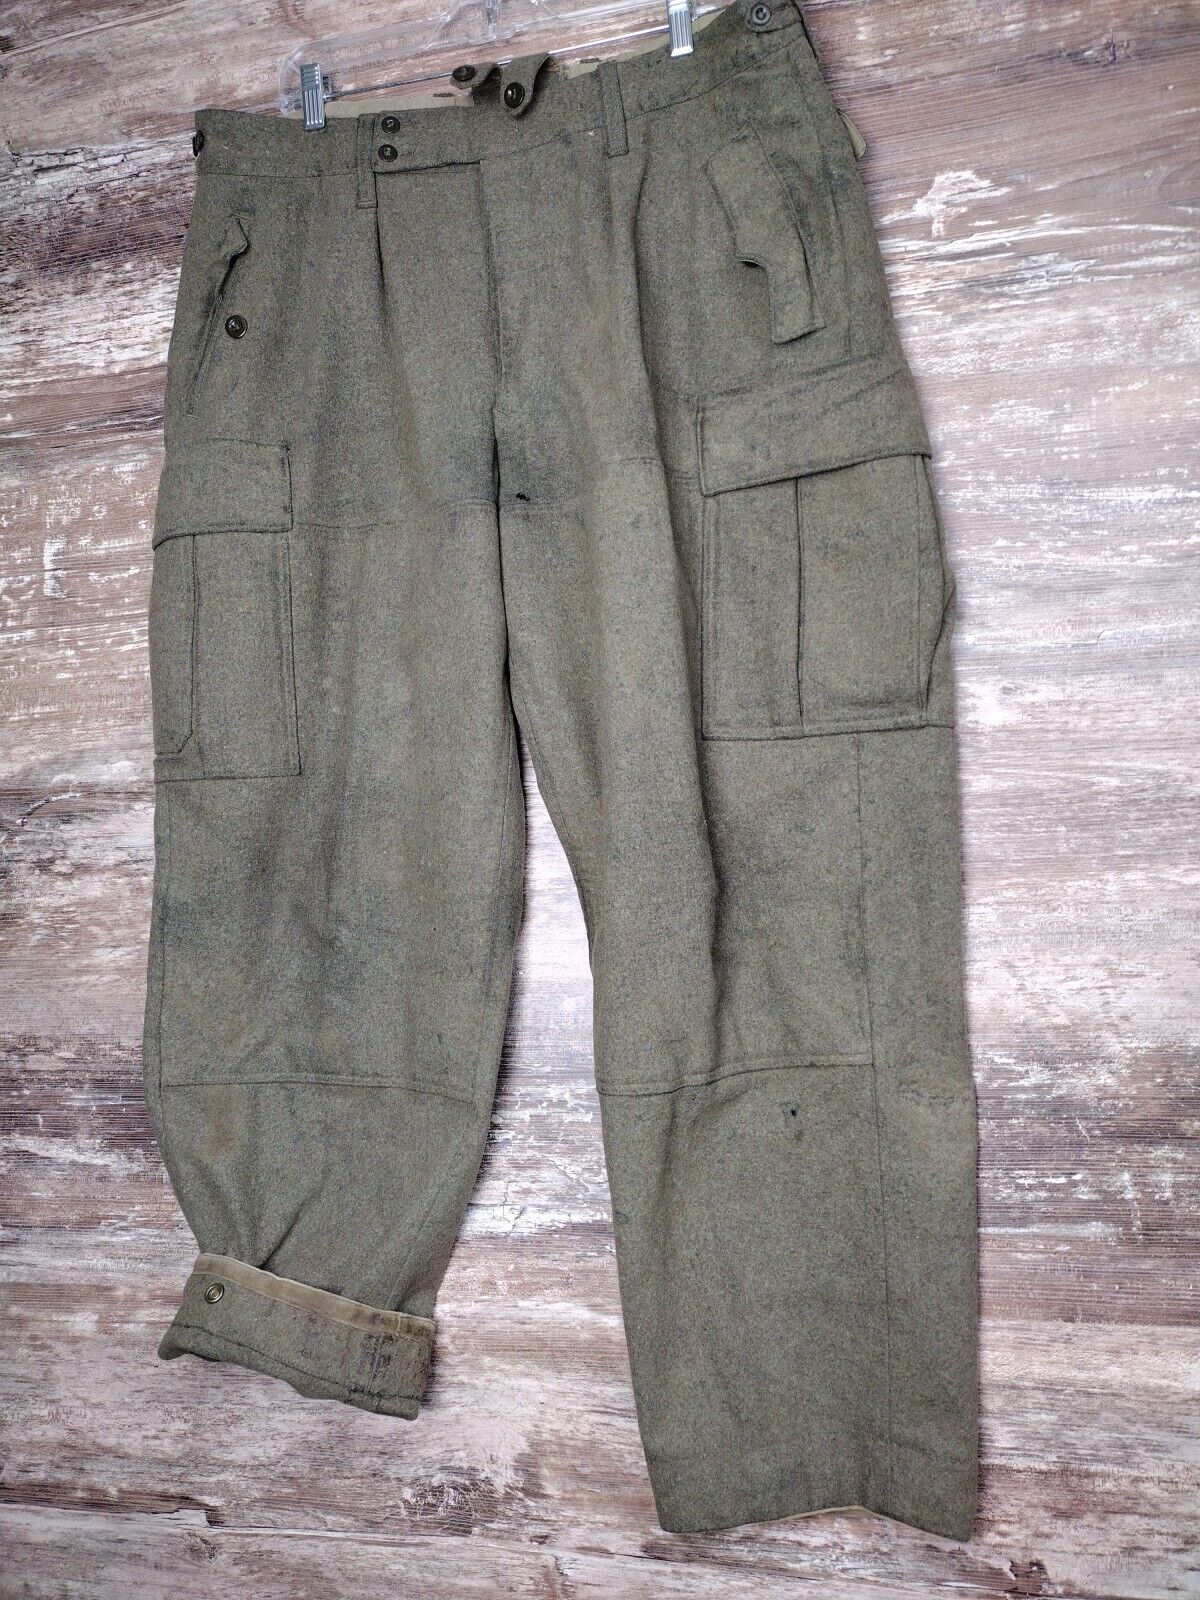 Vintage Niemann & Co Military Heavy Wool Field Pants Trousers Olive 38x30 1962?